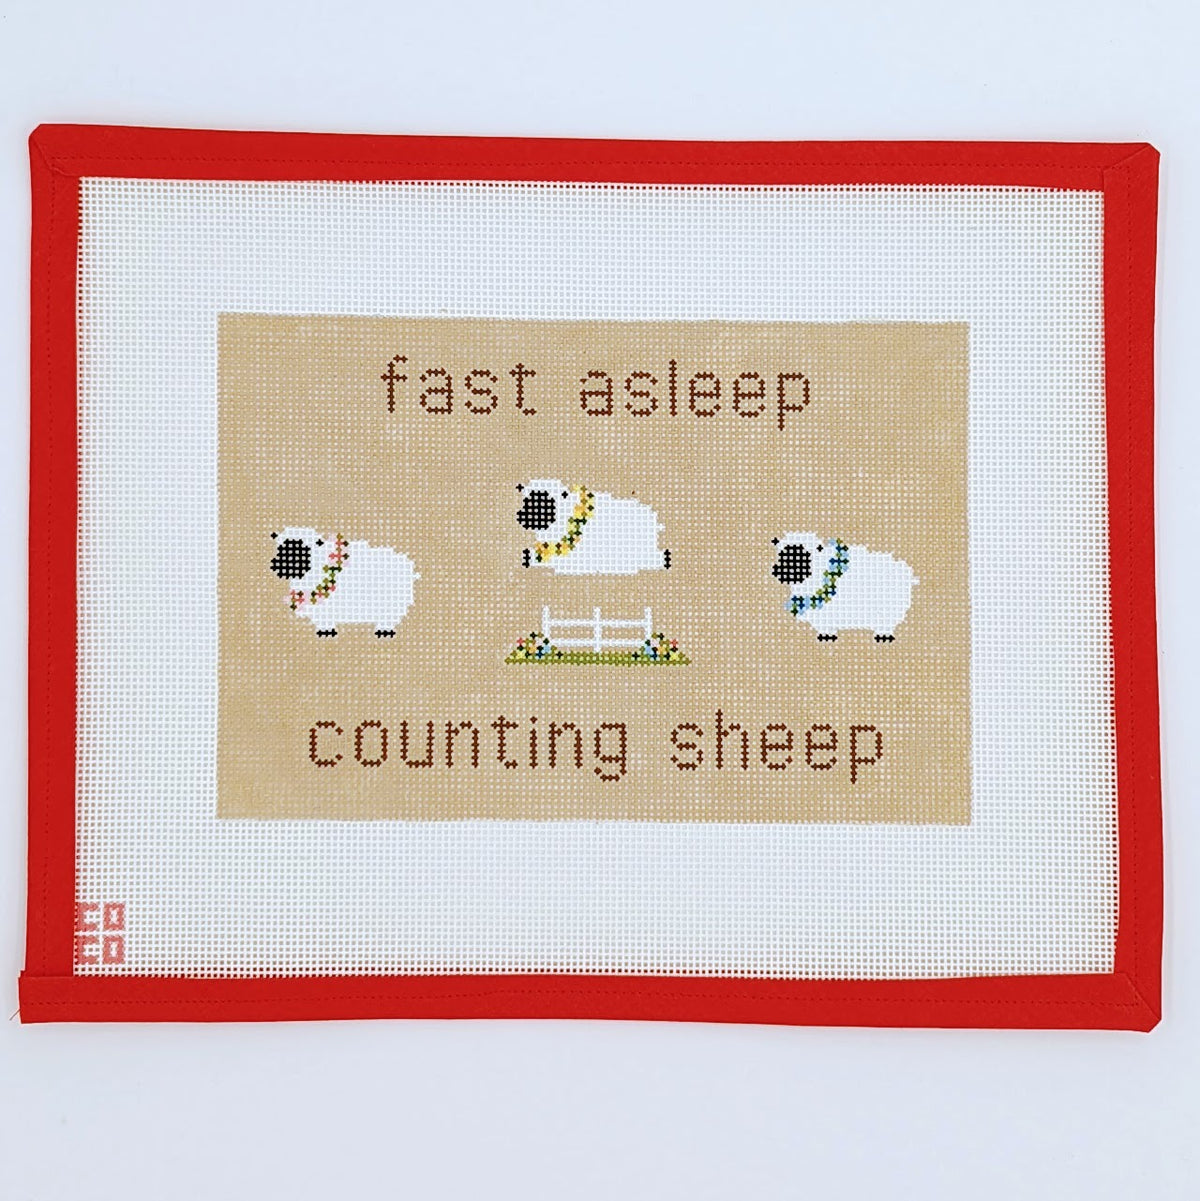 Fast Asleep Counting Sheep